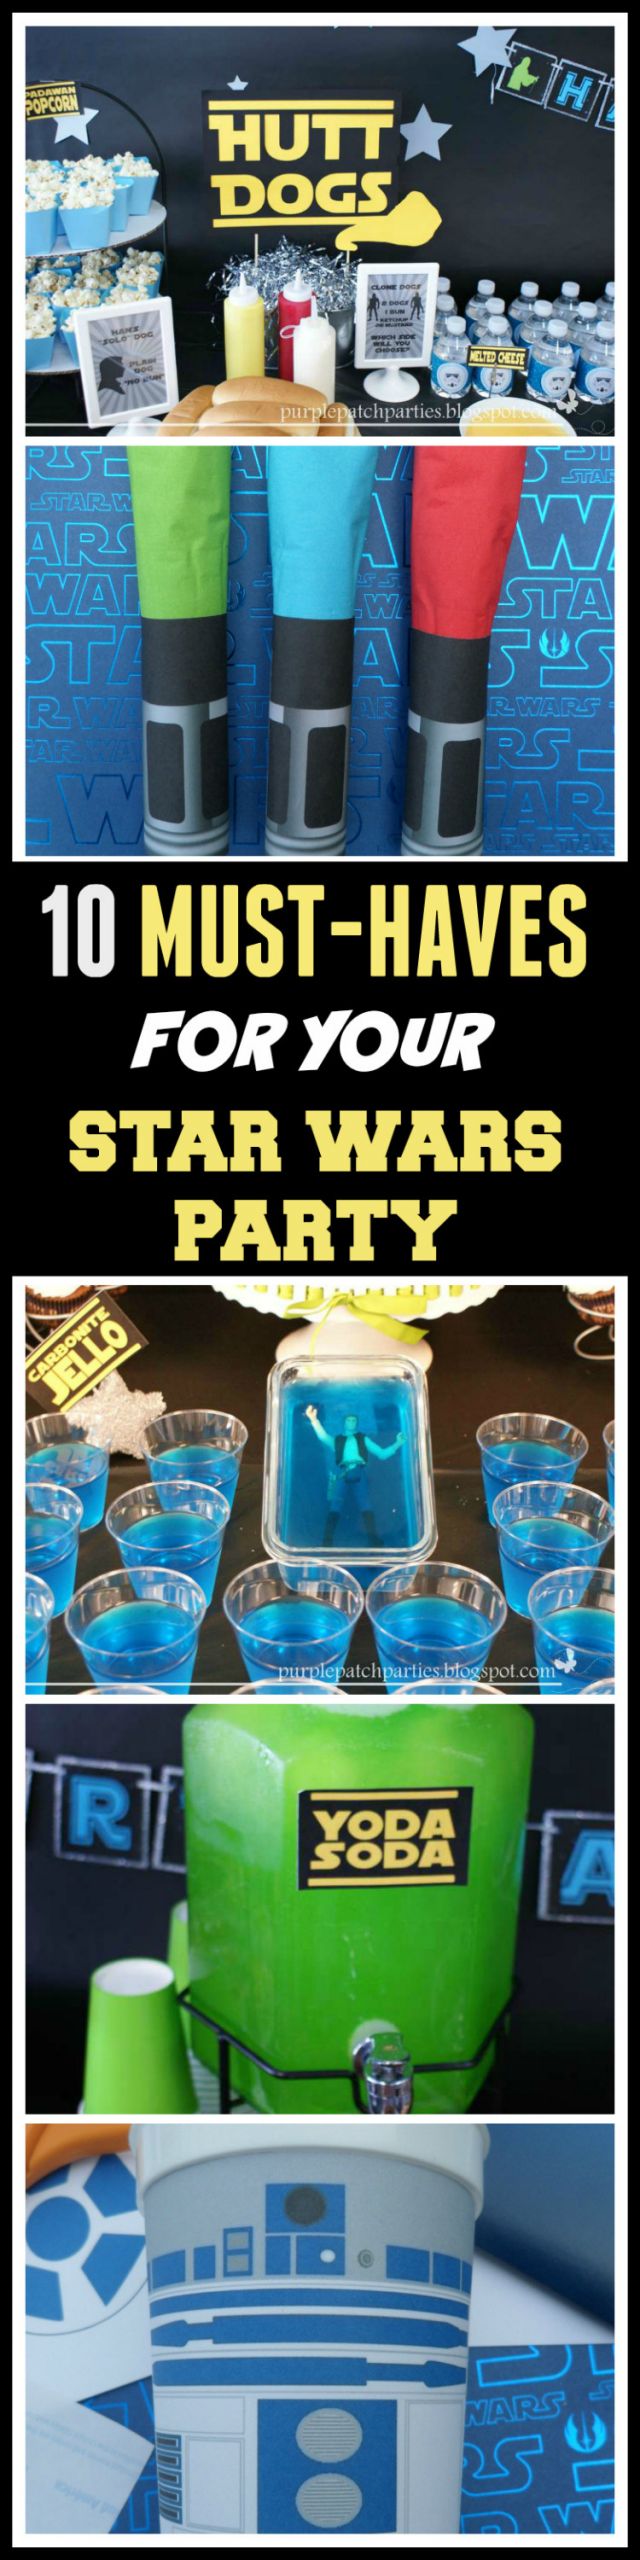 Star Wars Birthday Party Ideas
 10 Amazing Star Wars Party Ideas